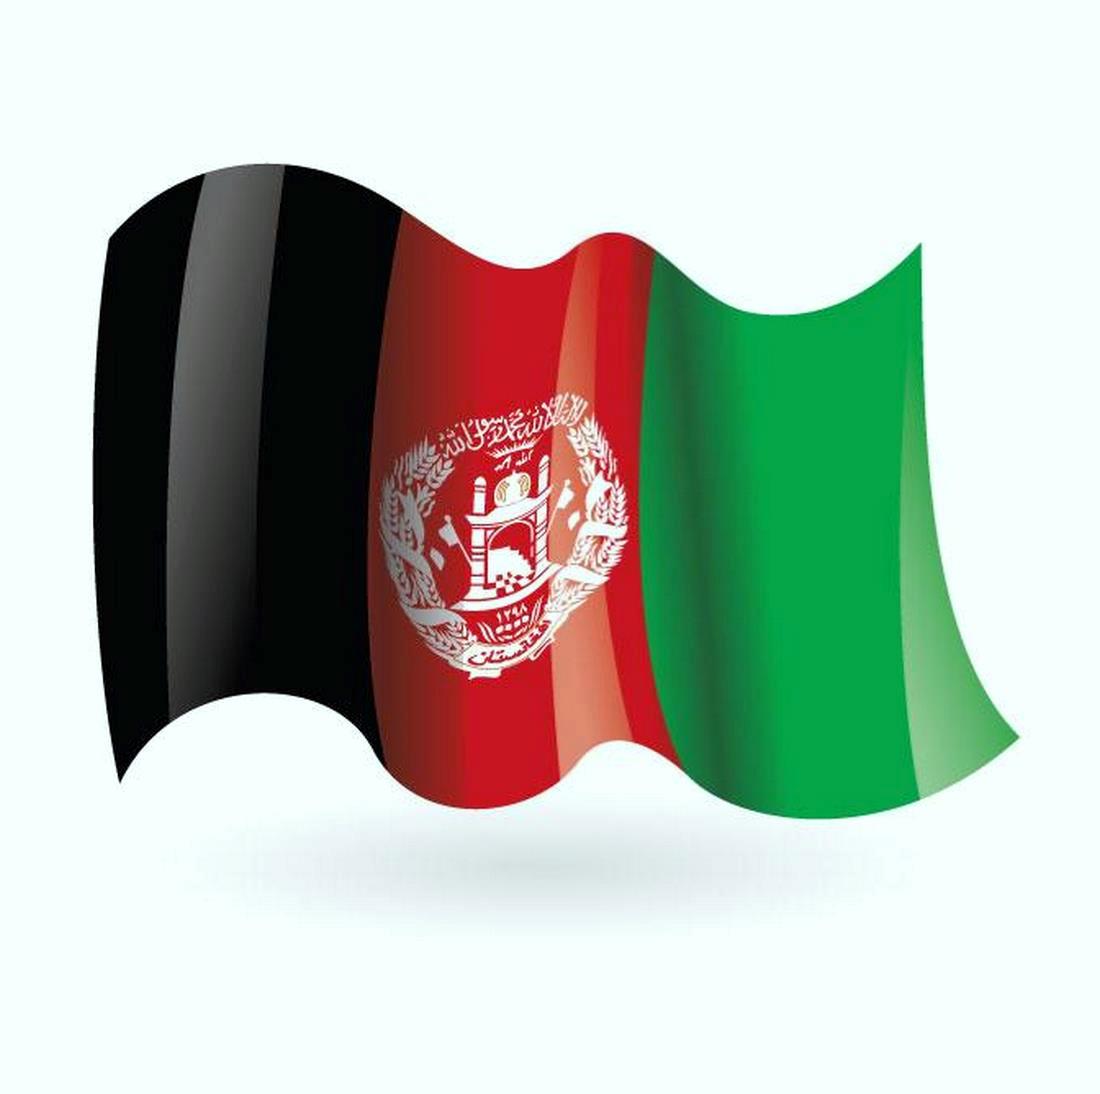 Wallpaper Afghanistan Flag Wallpapers